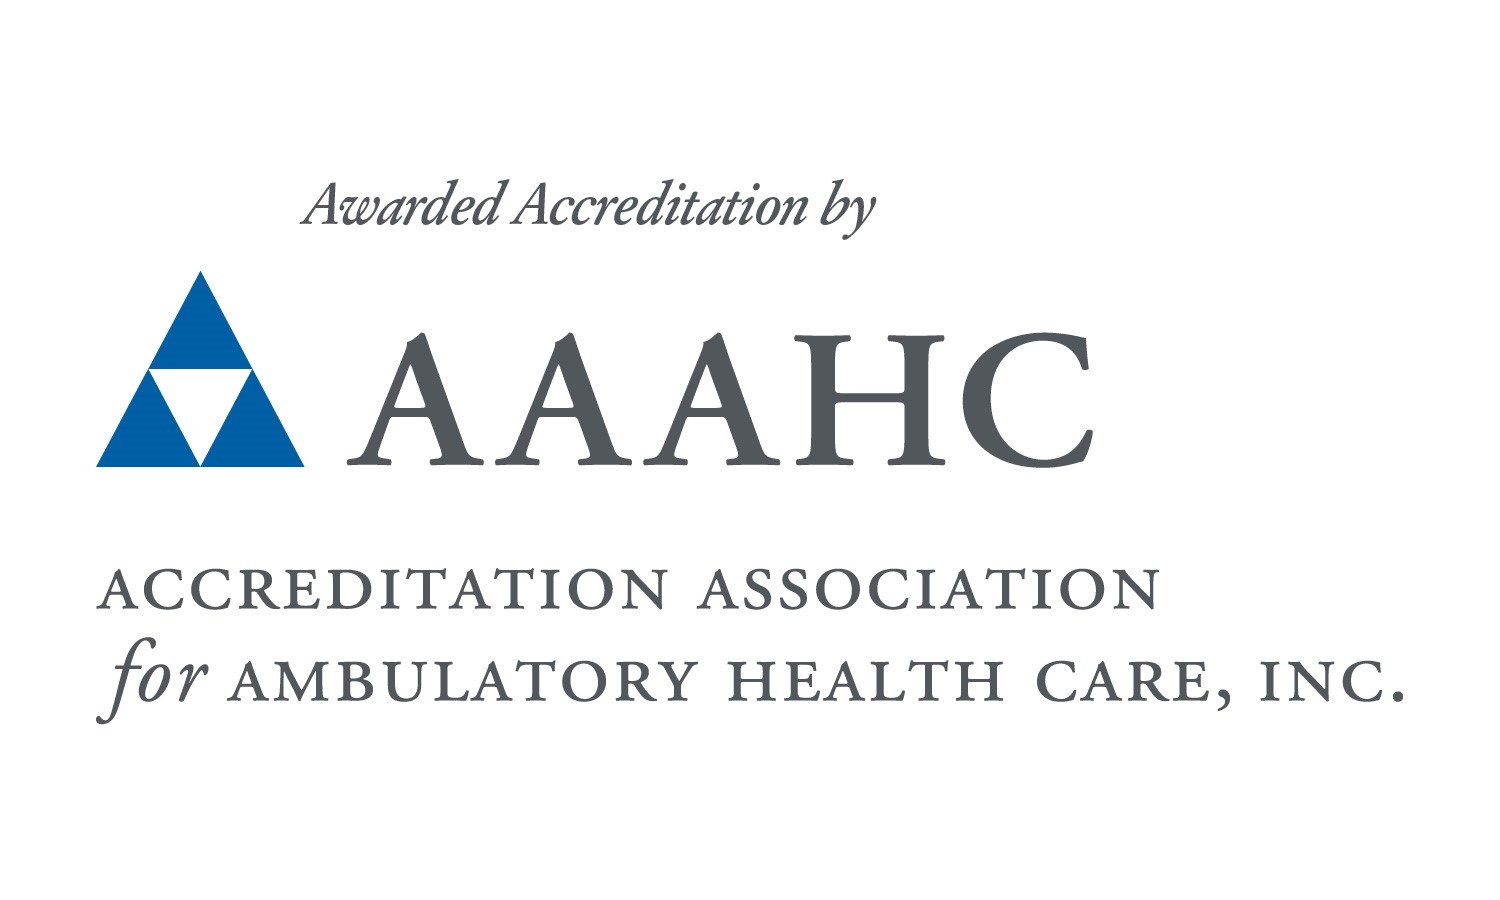 Accredifation Association for Ambulatory Health Care, Inc